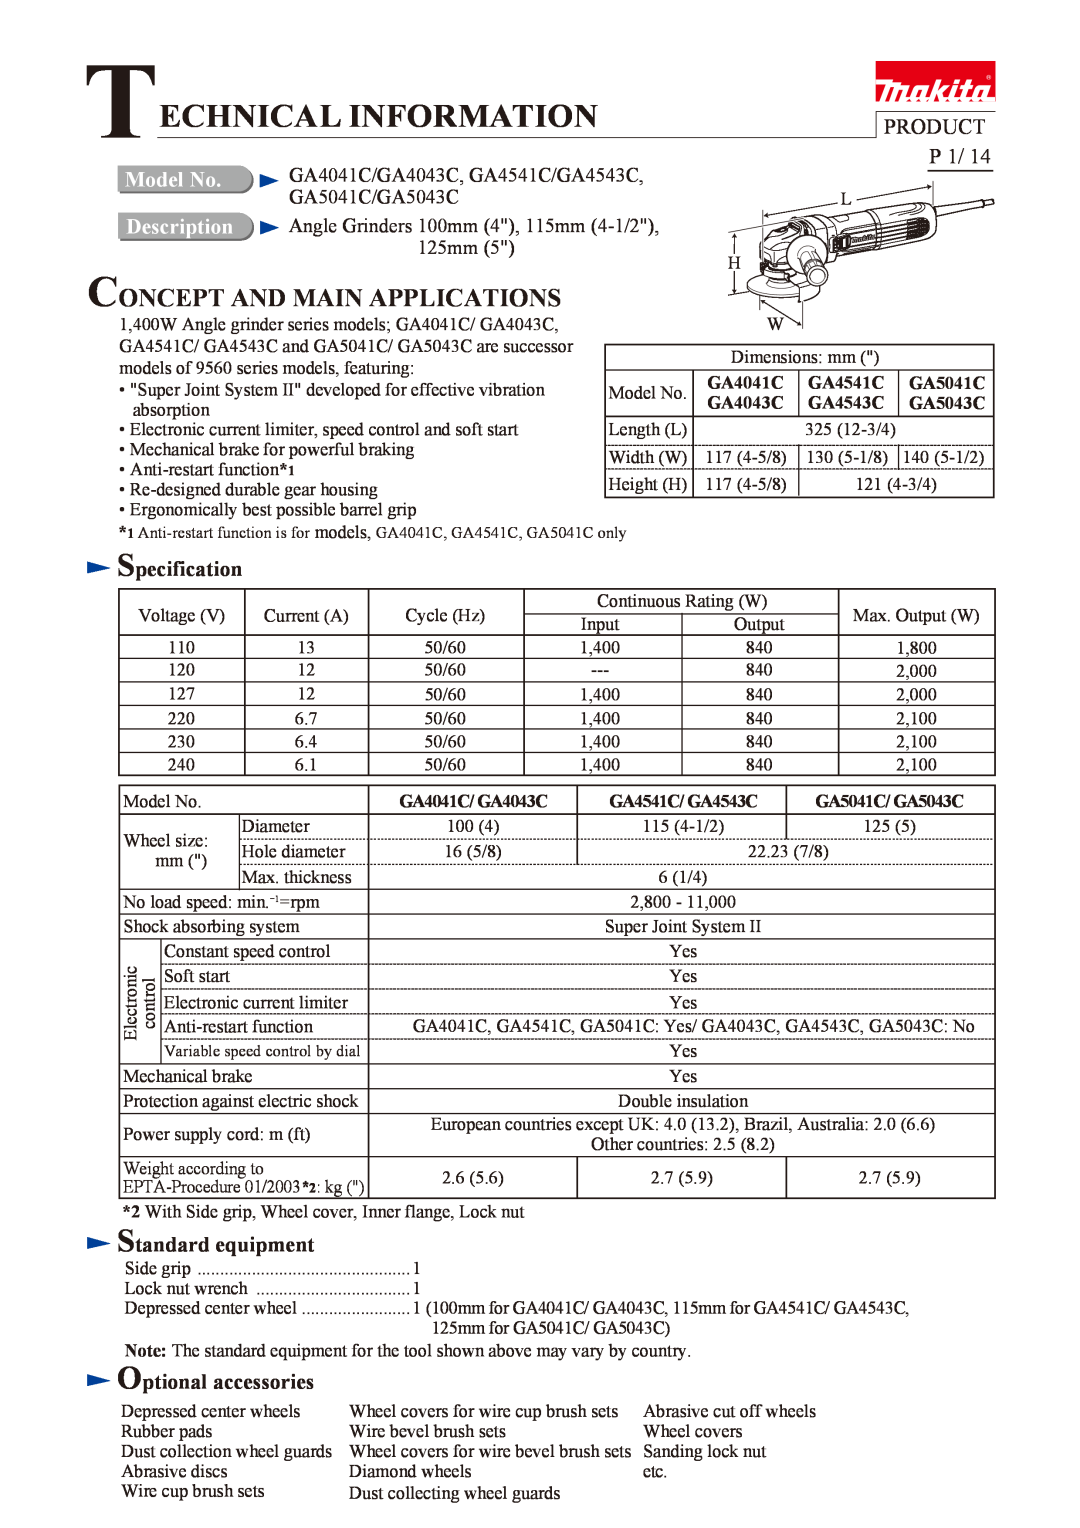 Makita GA4043C dimensions Pi / Sc / Np 海外営業管理承認, PRODUCT P 1, Specification, Standard equipment, Optional accessories 